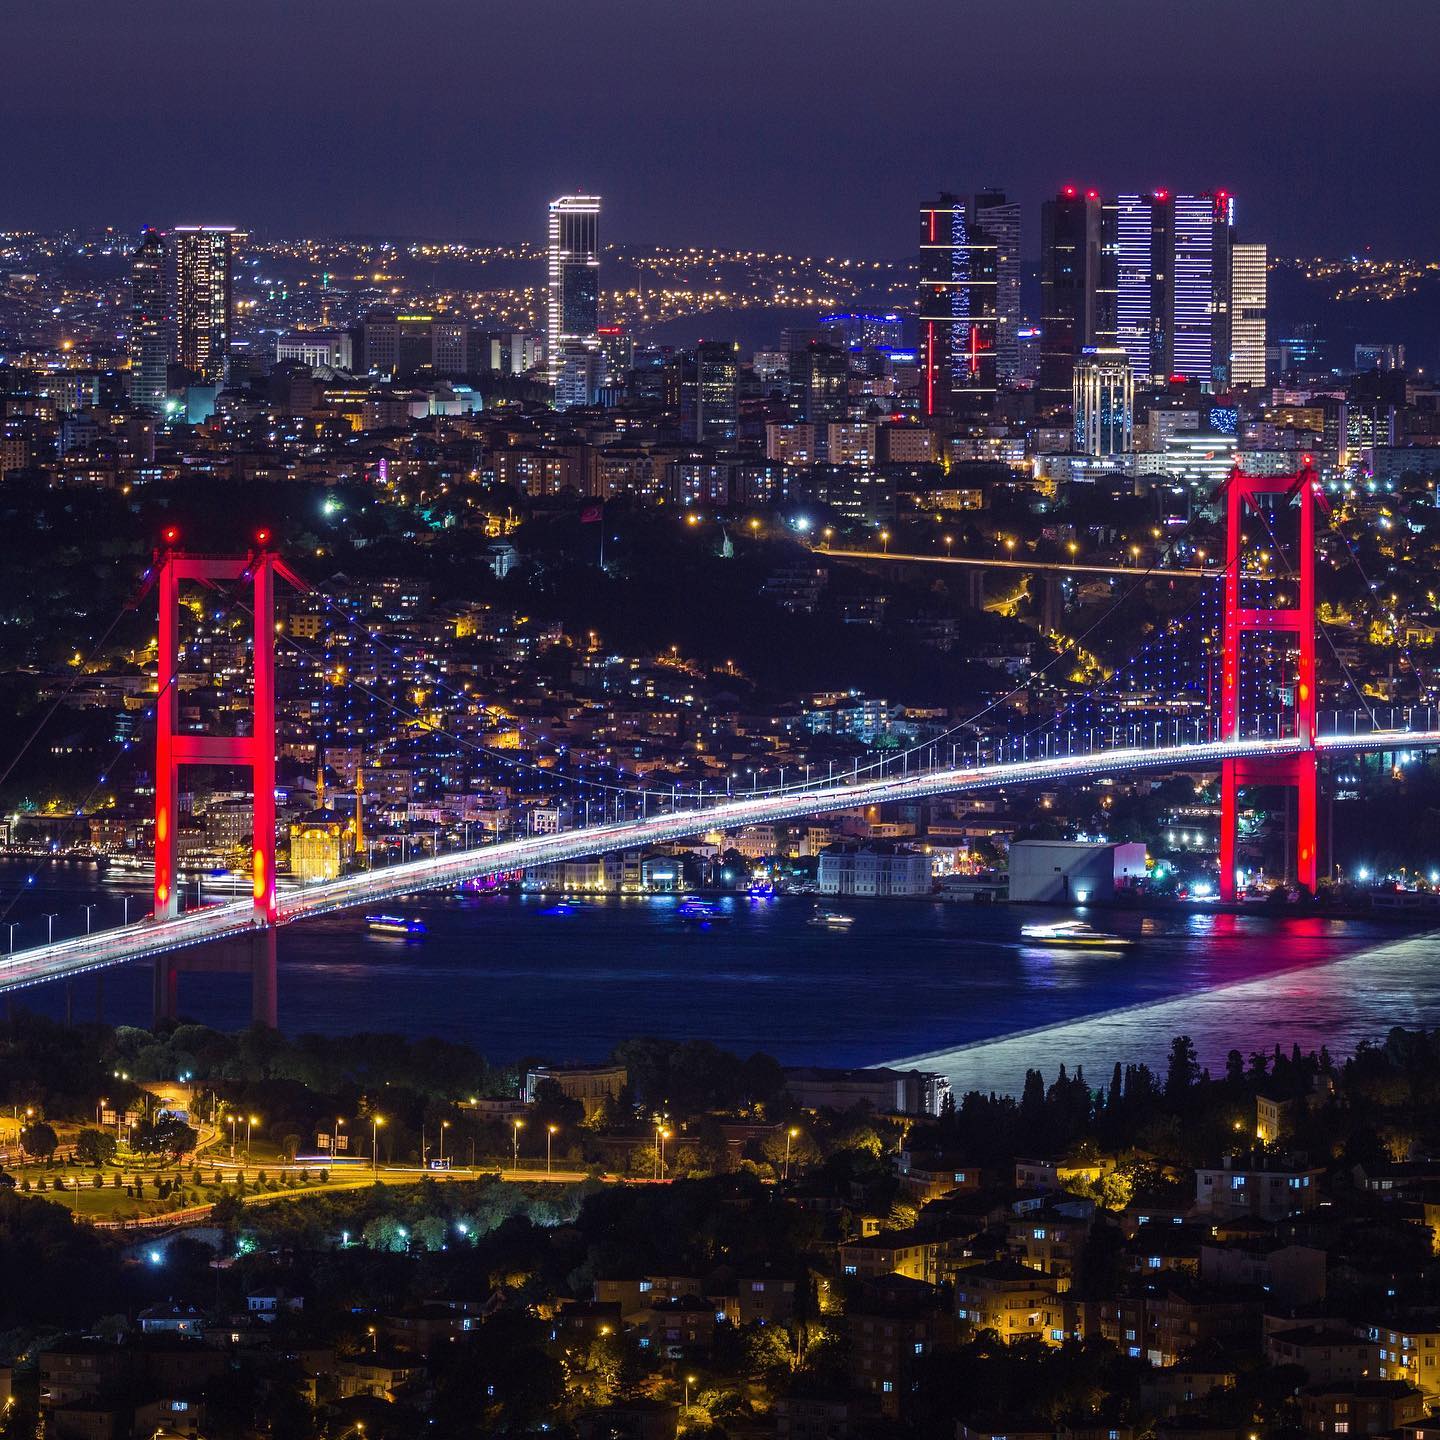 Bosphorus Bridge - where Europe meets Asia 🤝
.
.
#istanbul #turkey #türkiye #bosphorus #bosphorusbridge #camlica #çamlıcacamii #sightseeing #long_exposure #night #istanbulturkey #wonderful_places #beautifulplaces #canon #instagram #travel #traveler #europe #asia #europetoasia  #traveling #travelblog #travelblogger #istanbulbestpictures #bluehour #nightphotos #nightphotograpy #bridgeview #NIGHTSHOOTERS